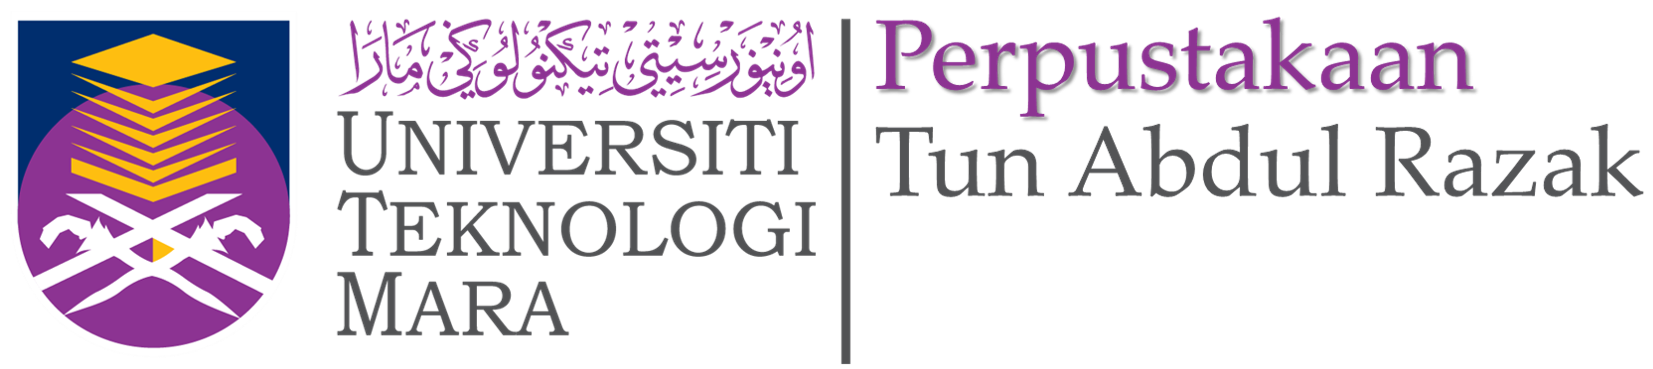 Logo Uitm Untuk Assignment - malaymalaq